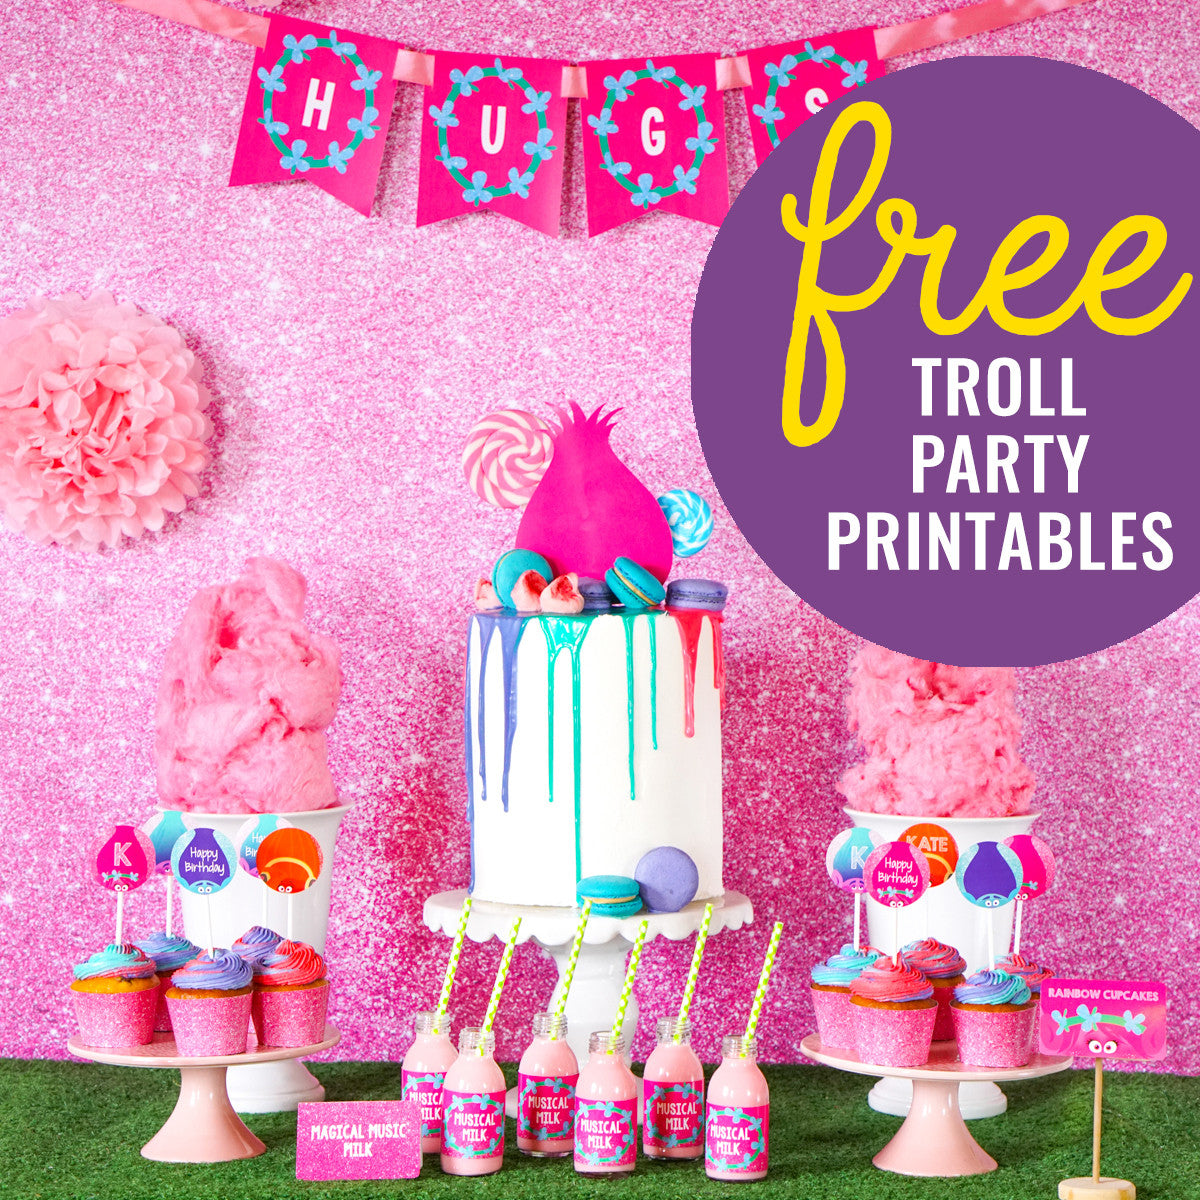 Free Trolls Party Printables